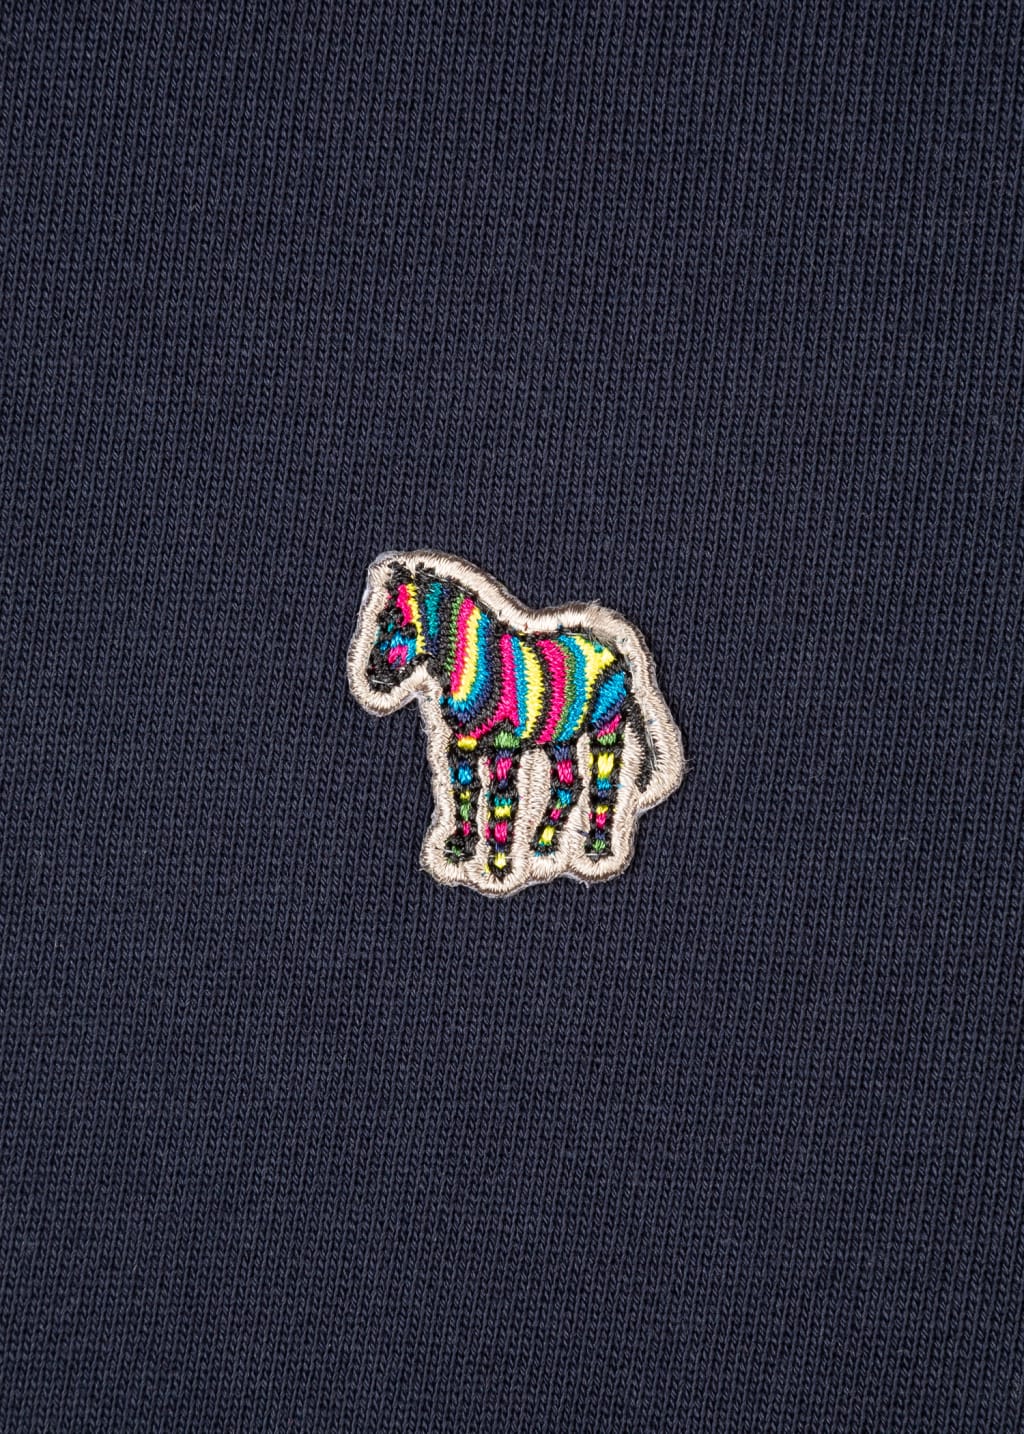 Detail View - Navy Cotton Zebra Logo Zip Sweatshirt Paul Smith